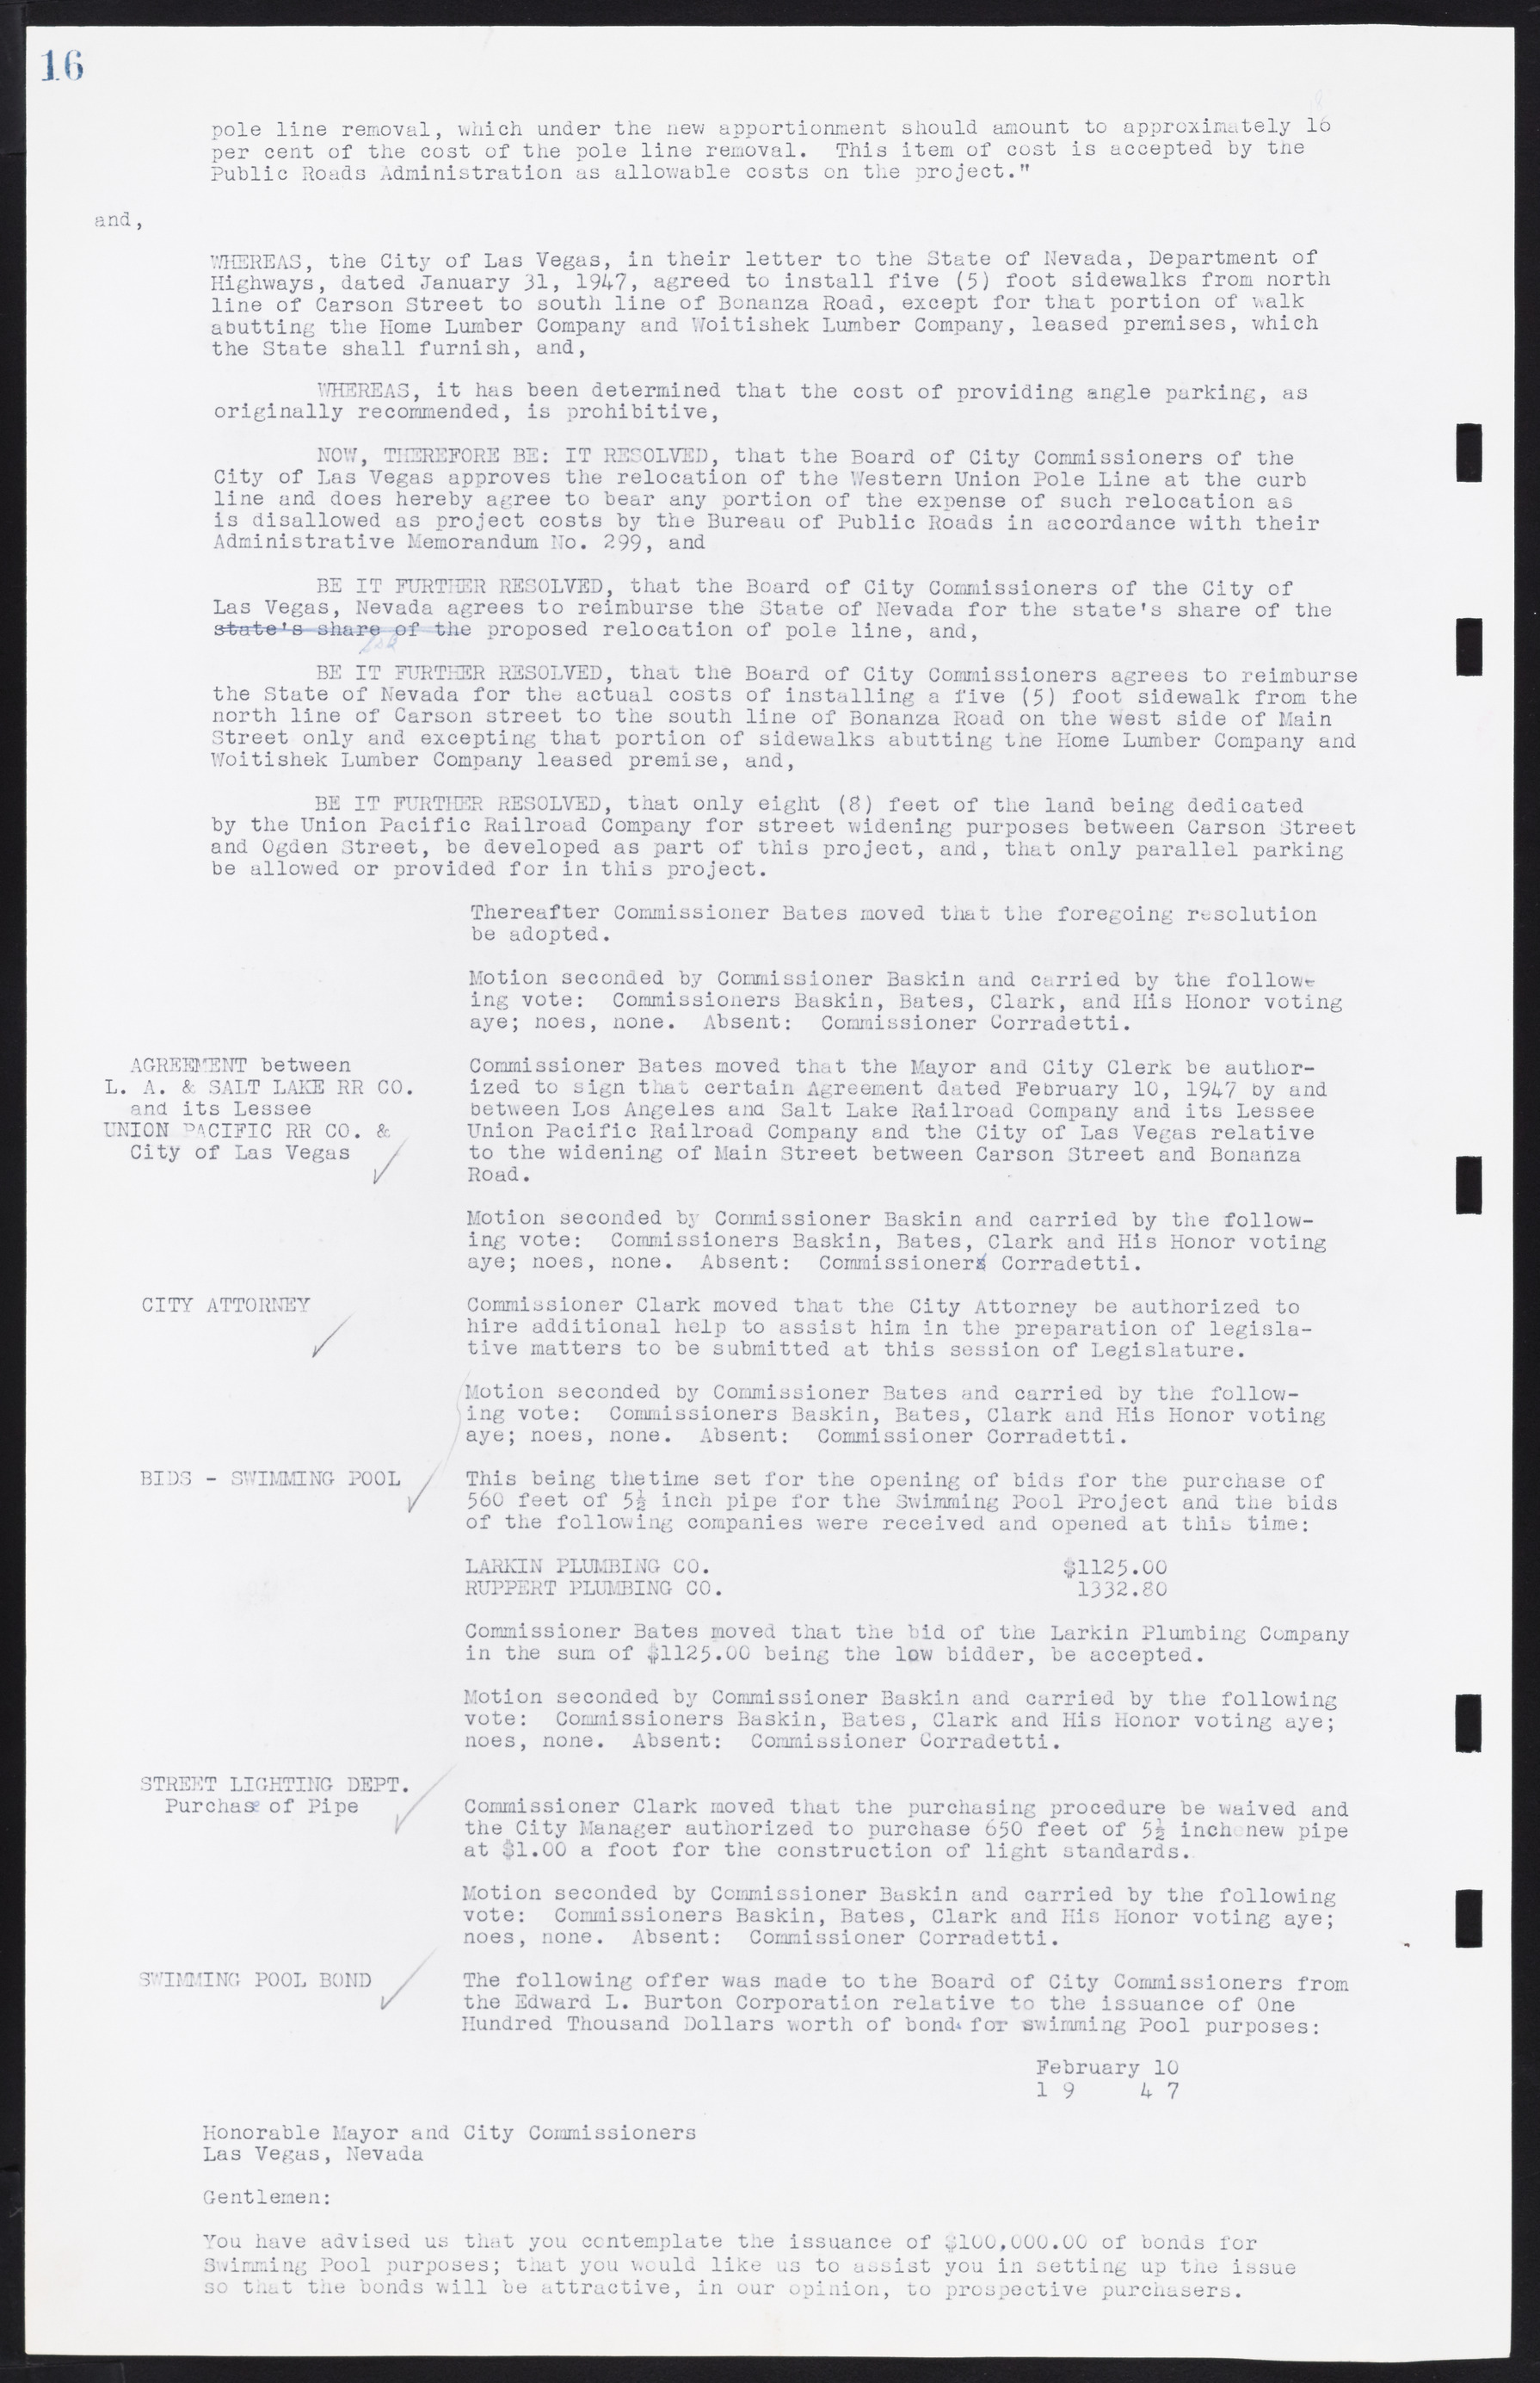 Las Vegas City Commission Minutes, January 7, 1947 to October 26, 1949, lvc000006-24